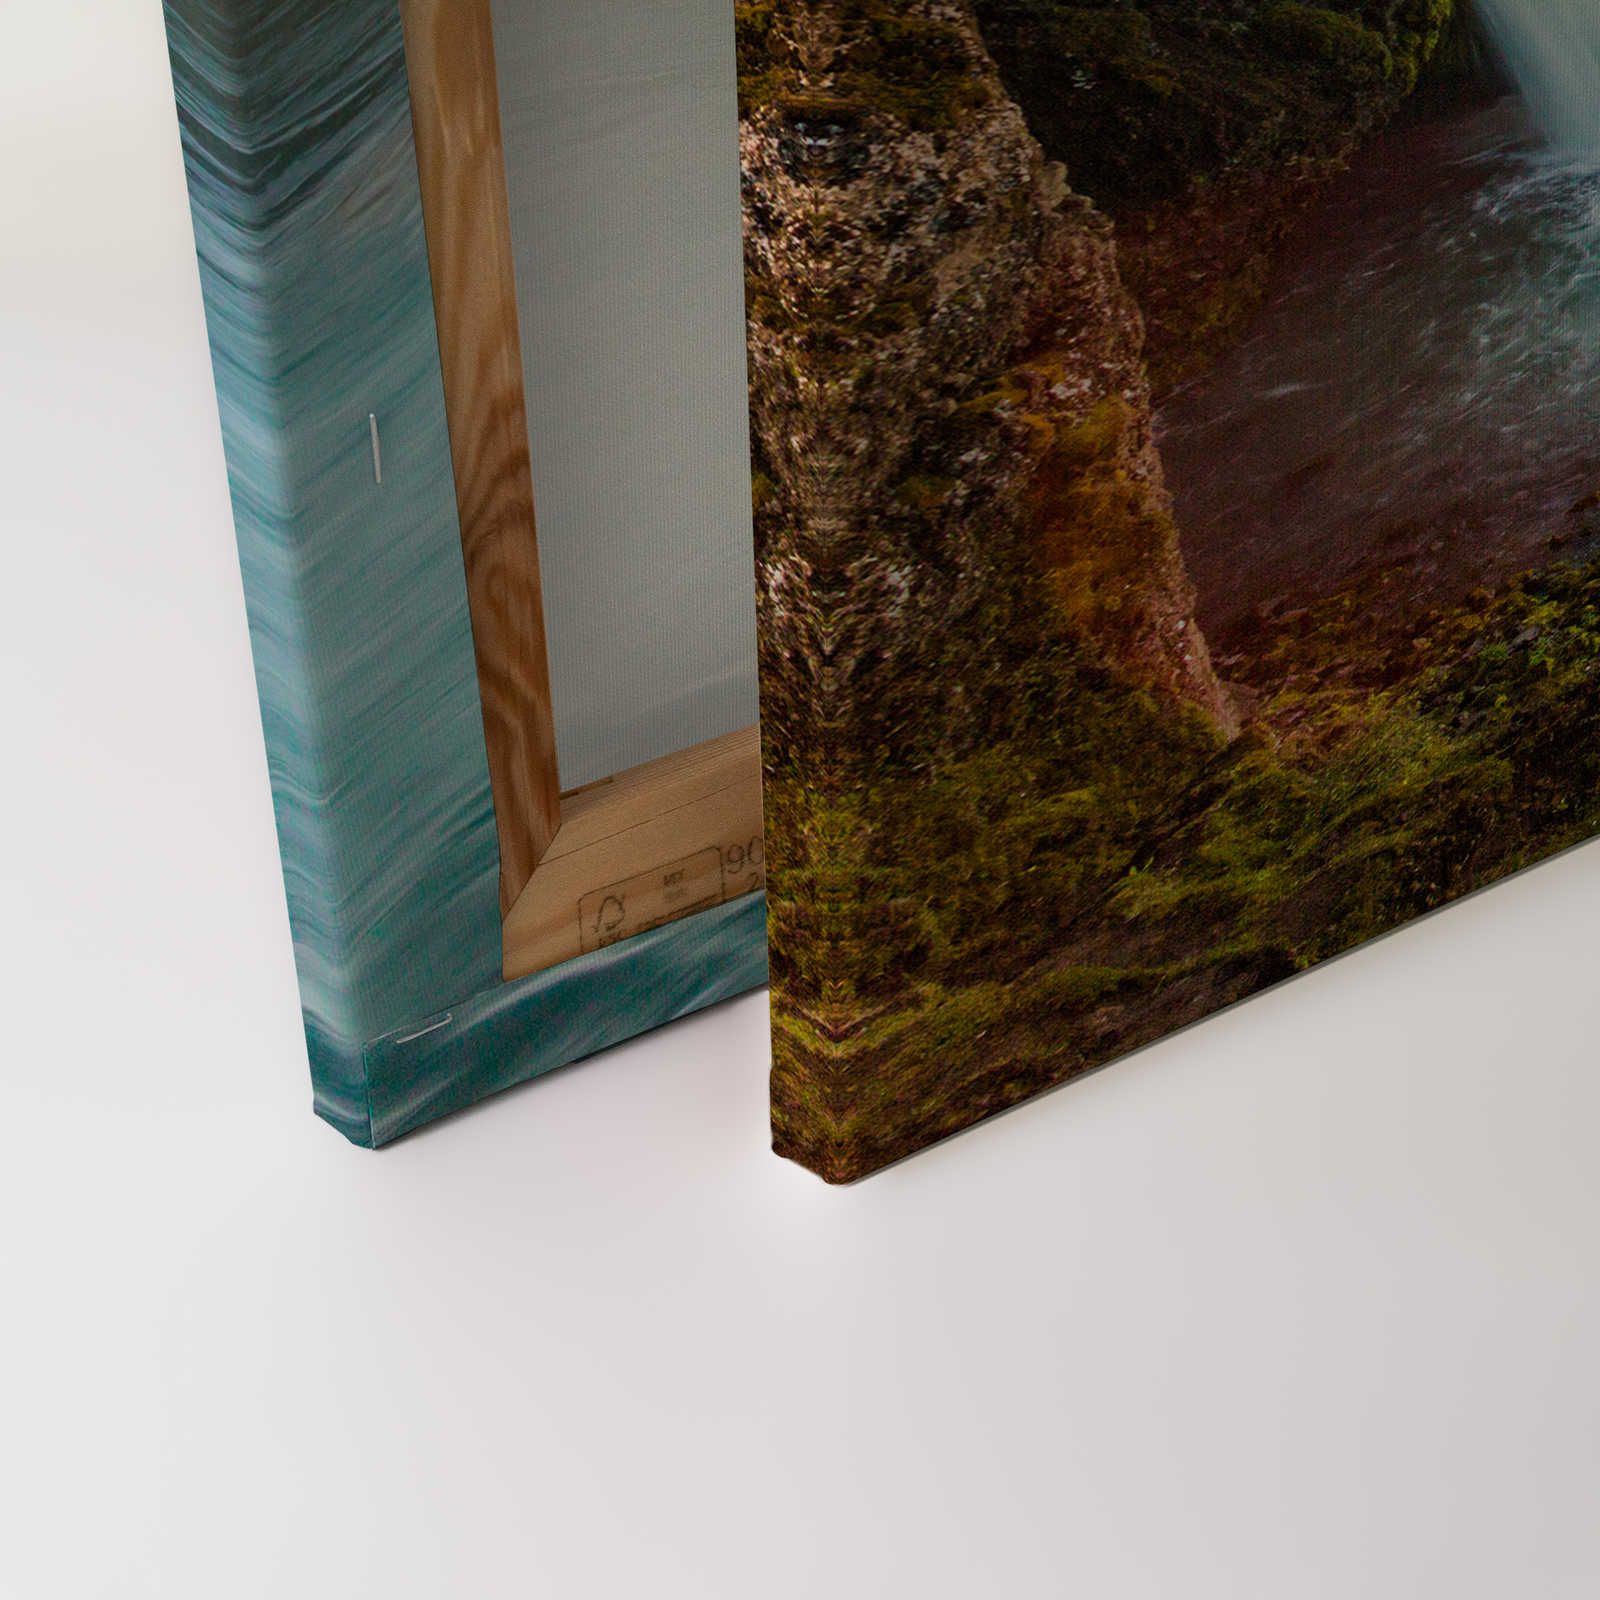             Godafoss Island - Tableau toile avec cascade panoramique - 0,90 m x 0,60 m
        